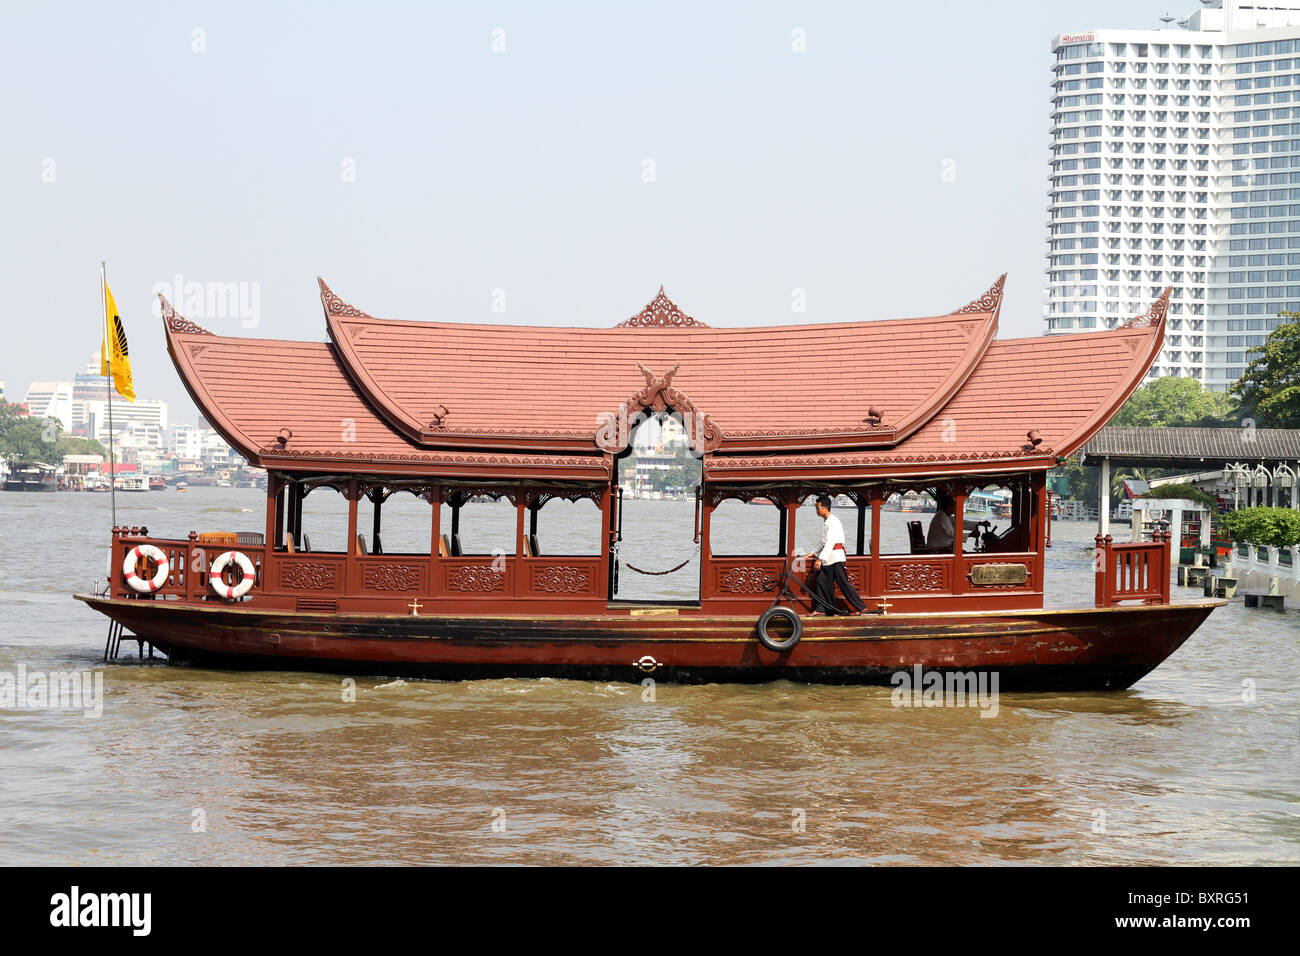 A traditional boat on the Chao Phraya River in Bangkok, Thailand Stock Photo